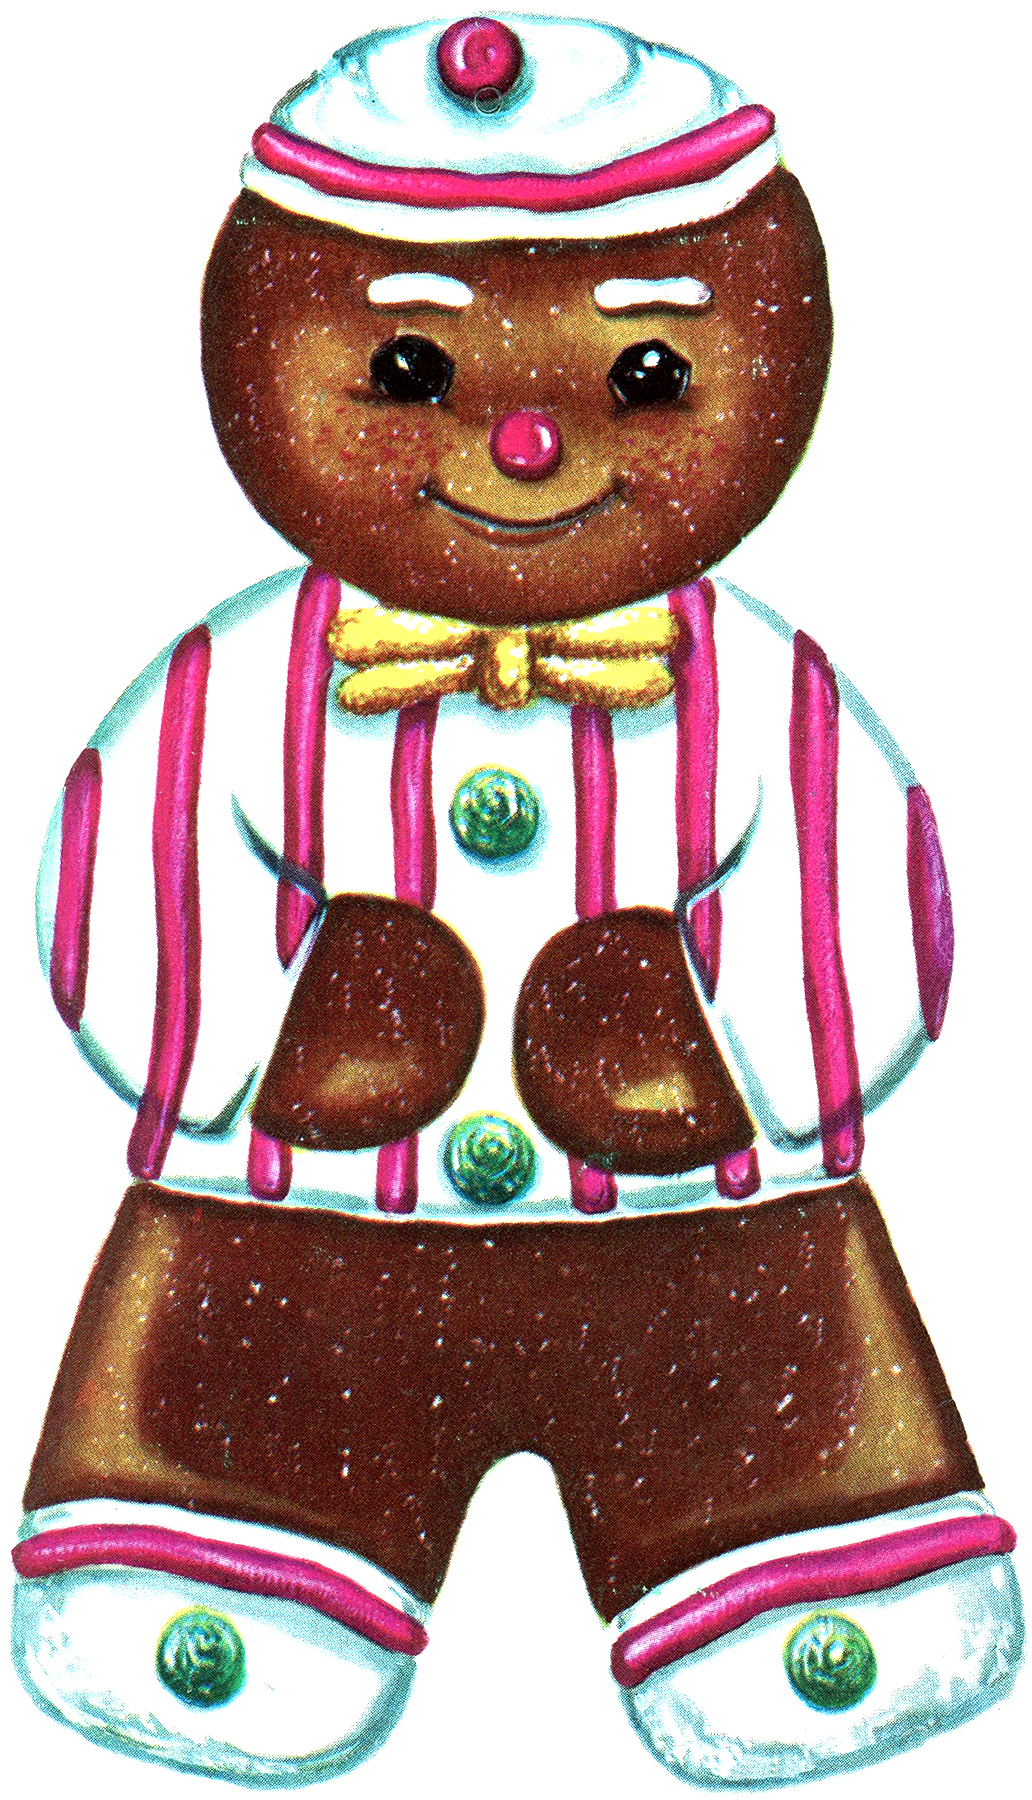 Merry Christmas Image Gingerbread Man